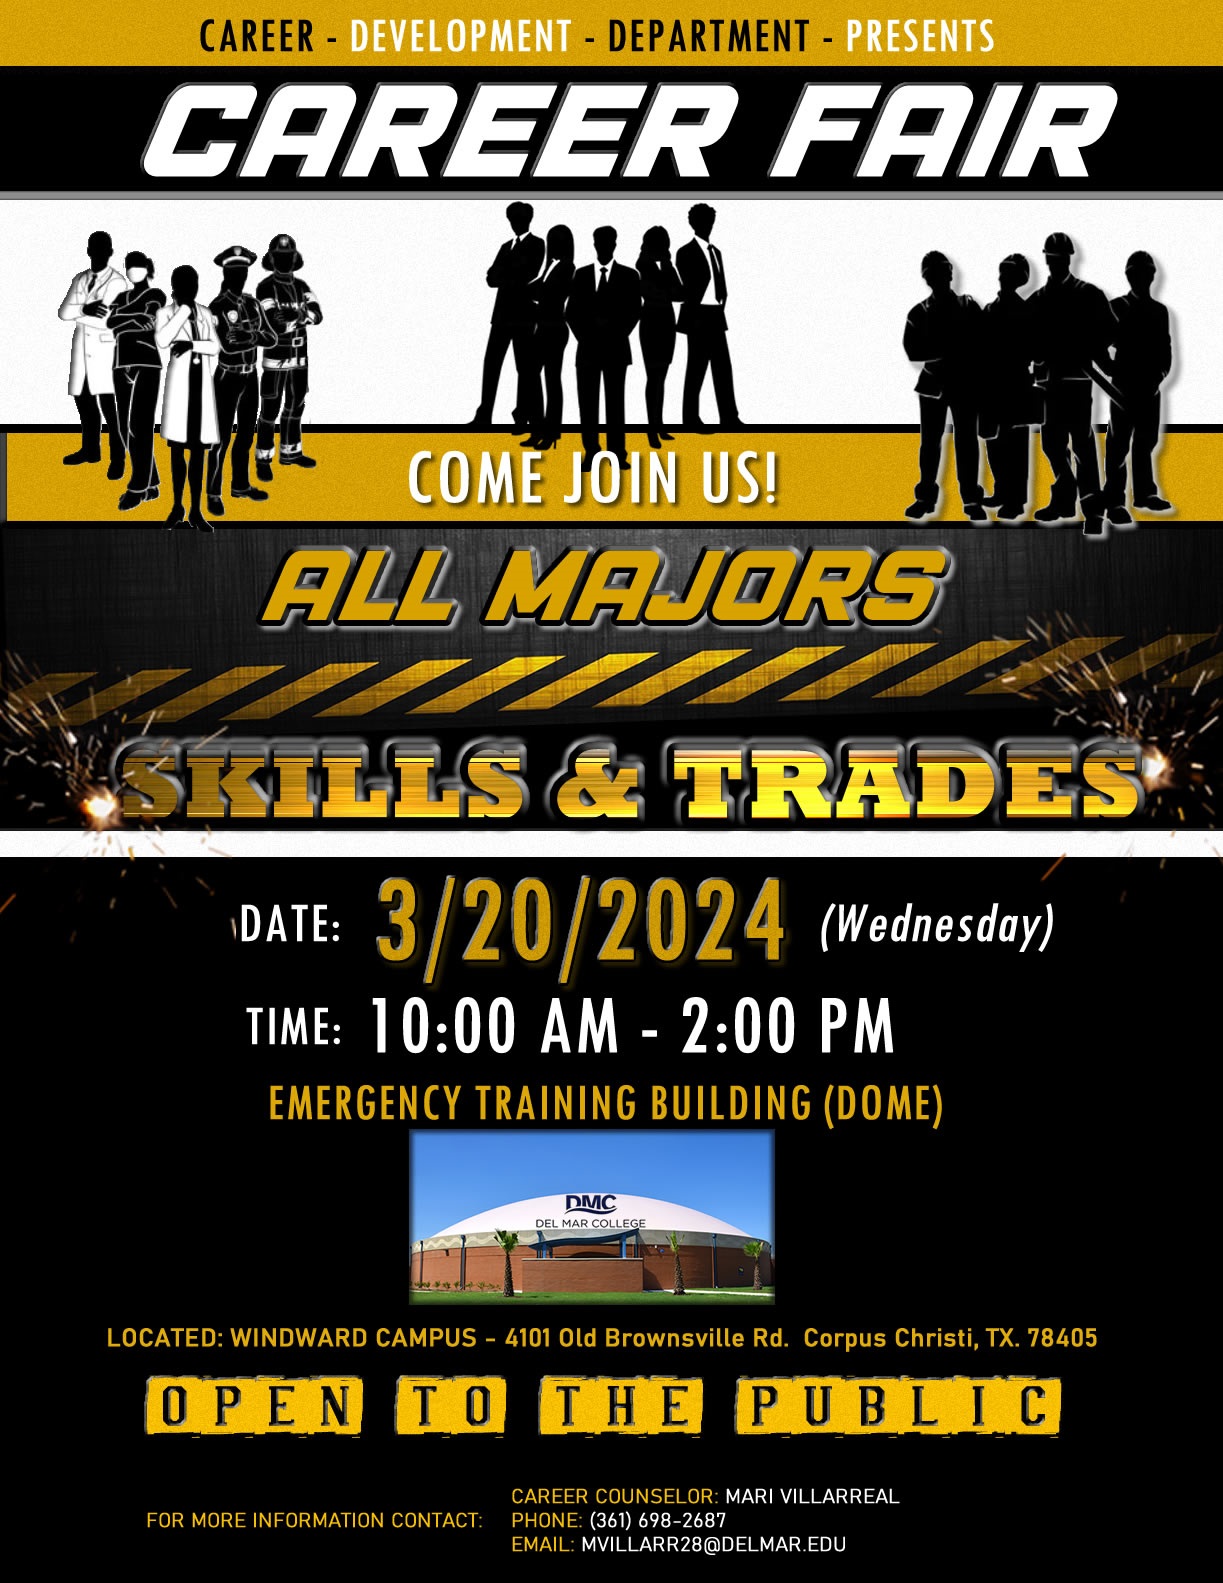 Del Mar Career Fair All Majors Skills & Trades Flyer